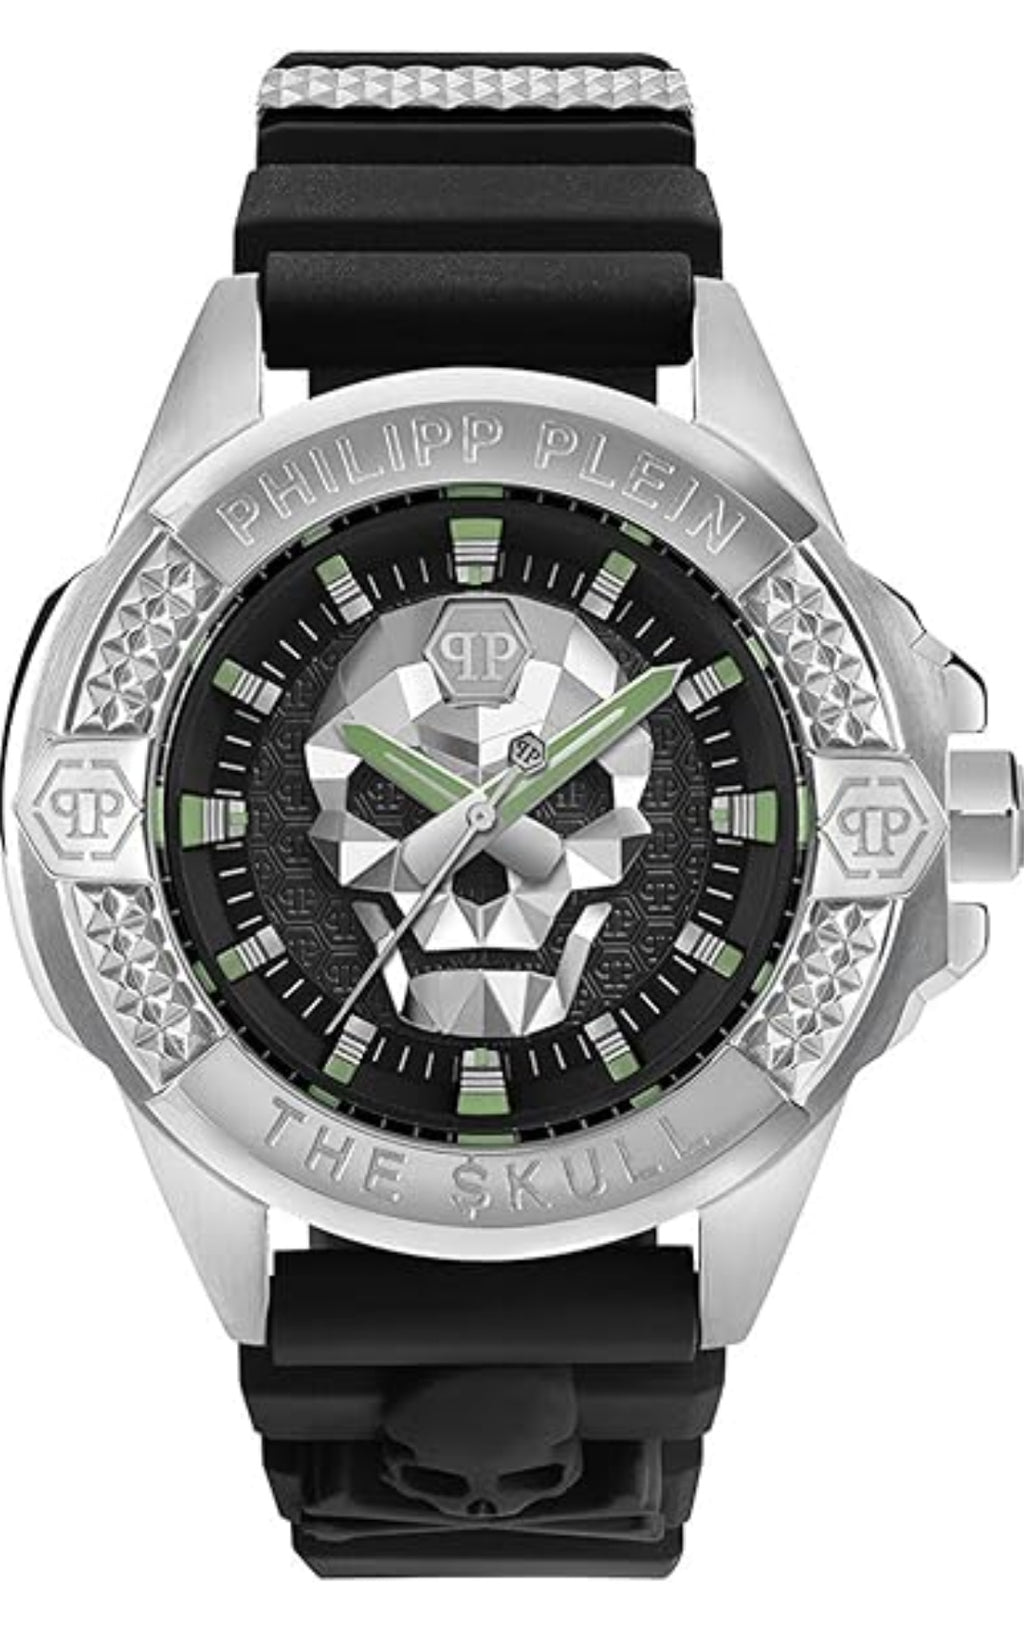 Uhr Philipp Plein, Analog Quarzuhr, Edelstahl, Mineralglas, Silikon-Armband schwarz